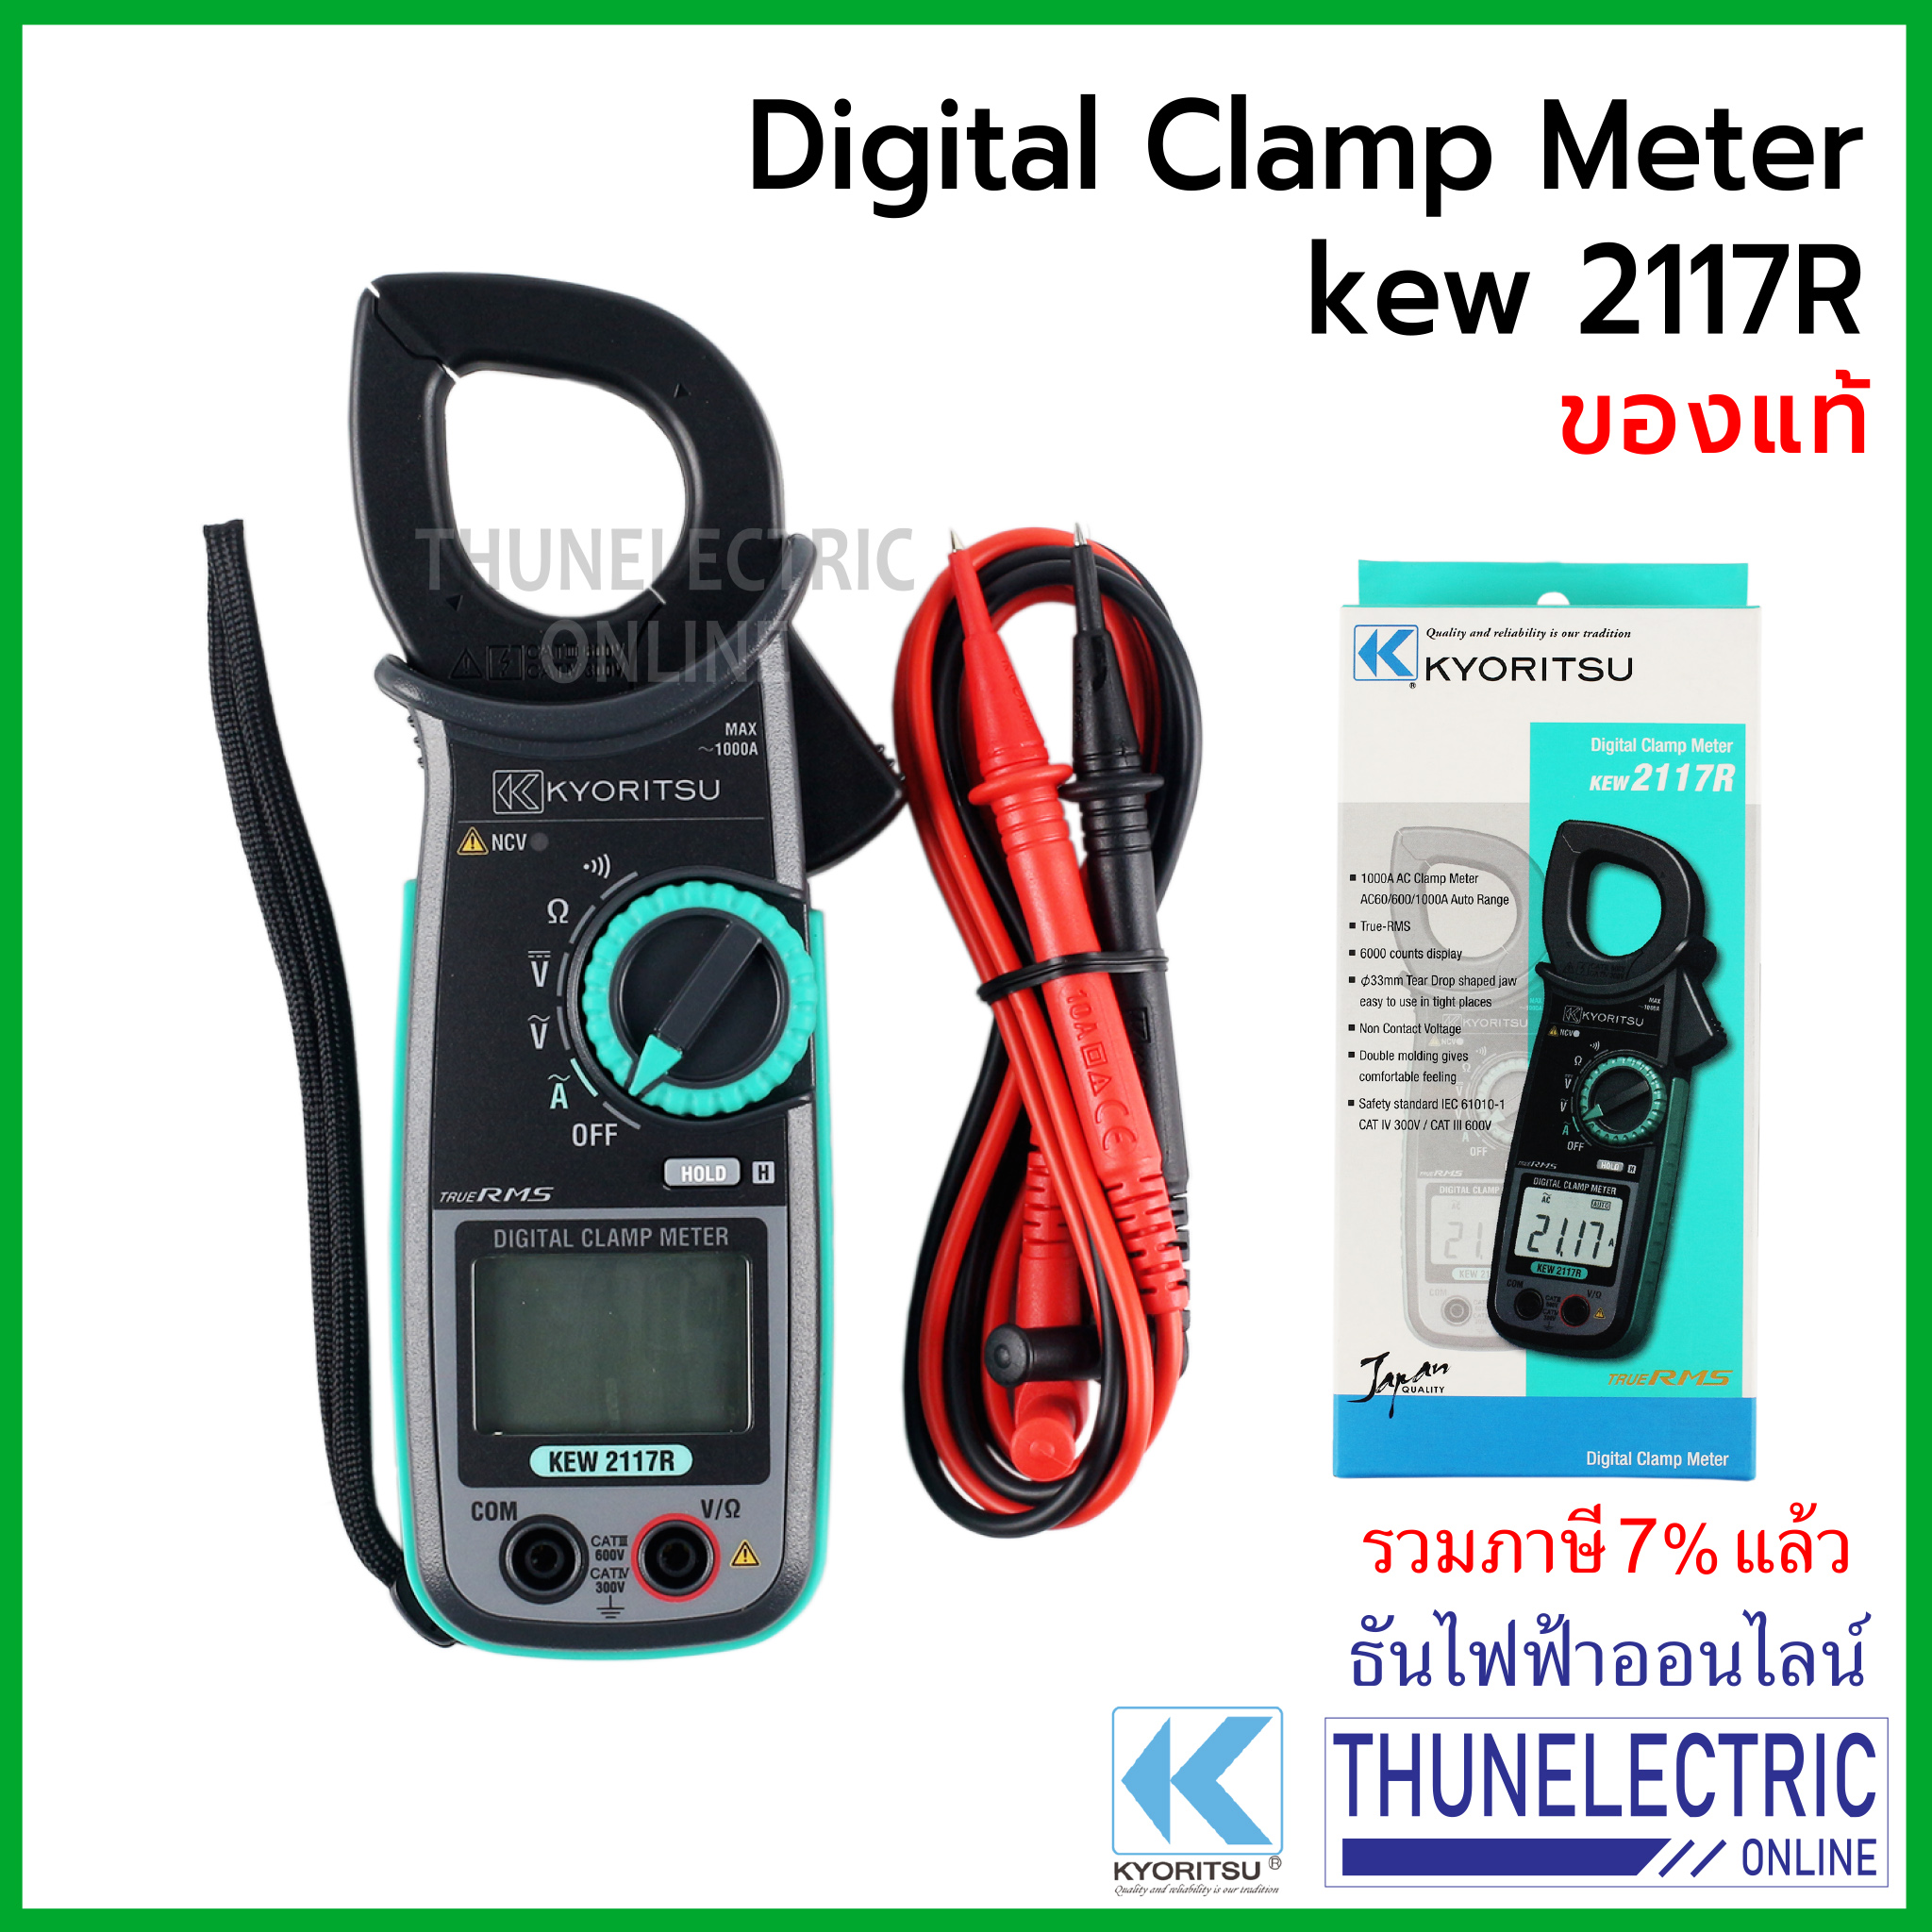 Kyoritsu แคลมป์มิเตอร์ ดิจิตอล KEW 2117R คลิปแอมป์ วัดกระแสไฟฟ้า AC 1000A Digital Clamp Meter เคียวริทสึ ธันไฟฟ้า Thun